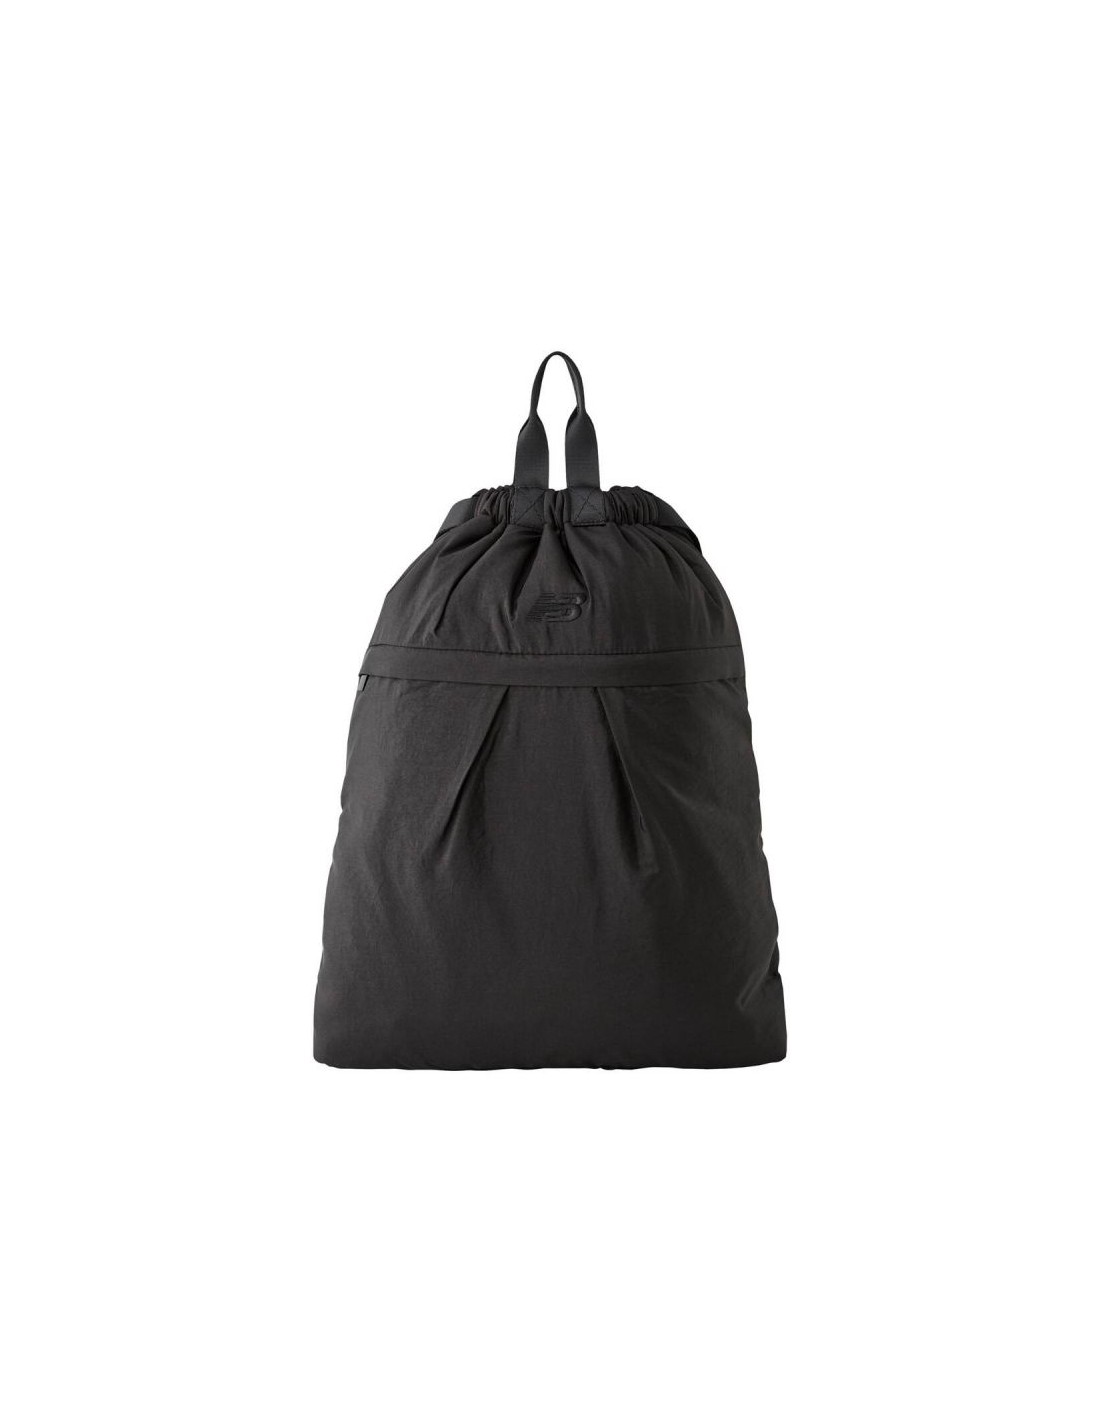 New Balance Tote BK LAB31007BK backpack